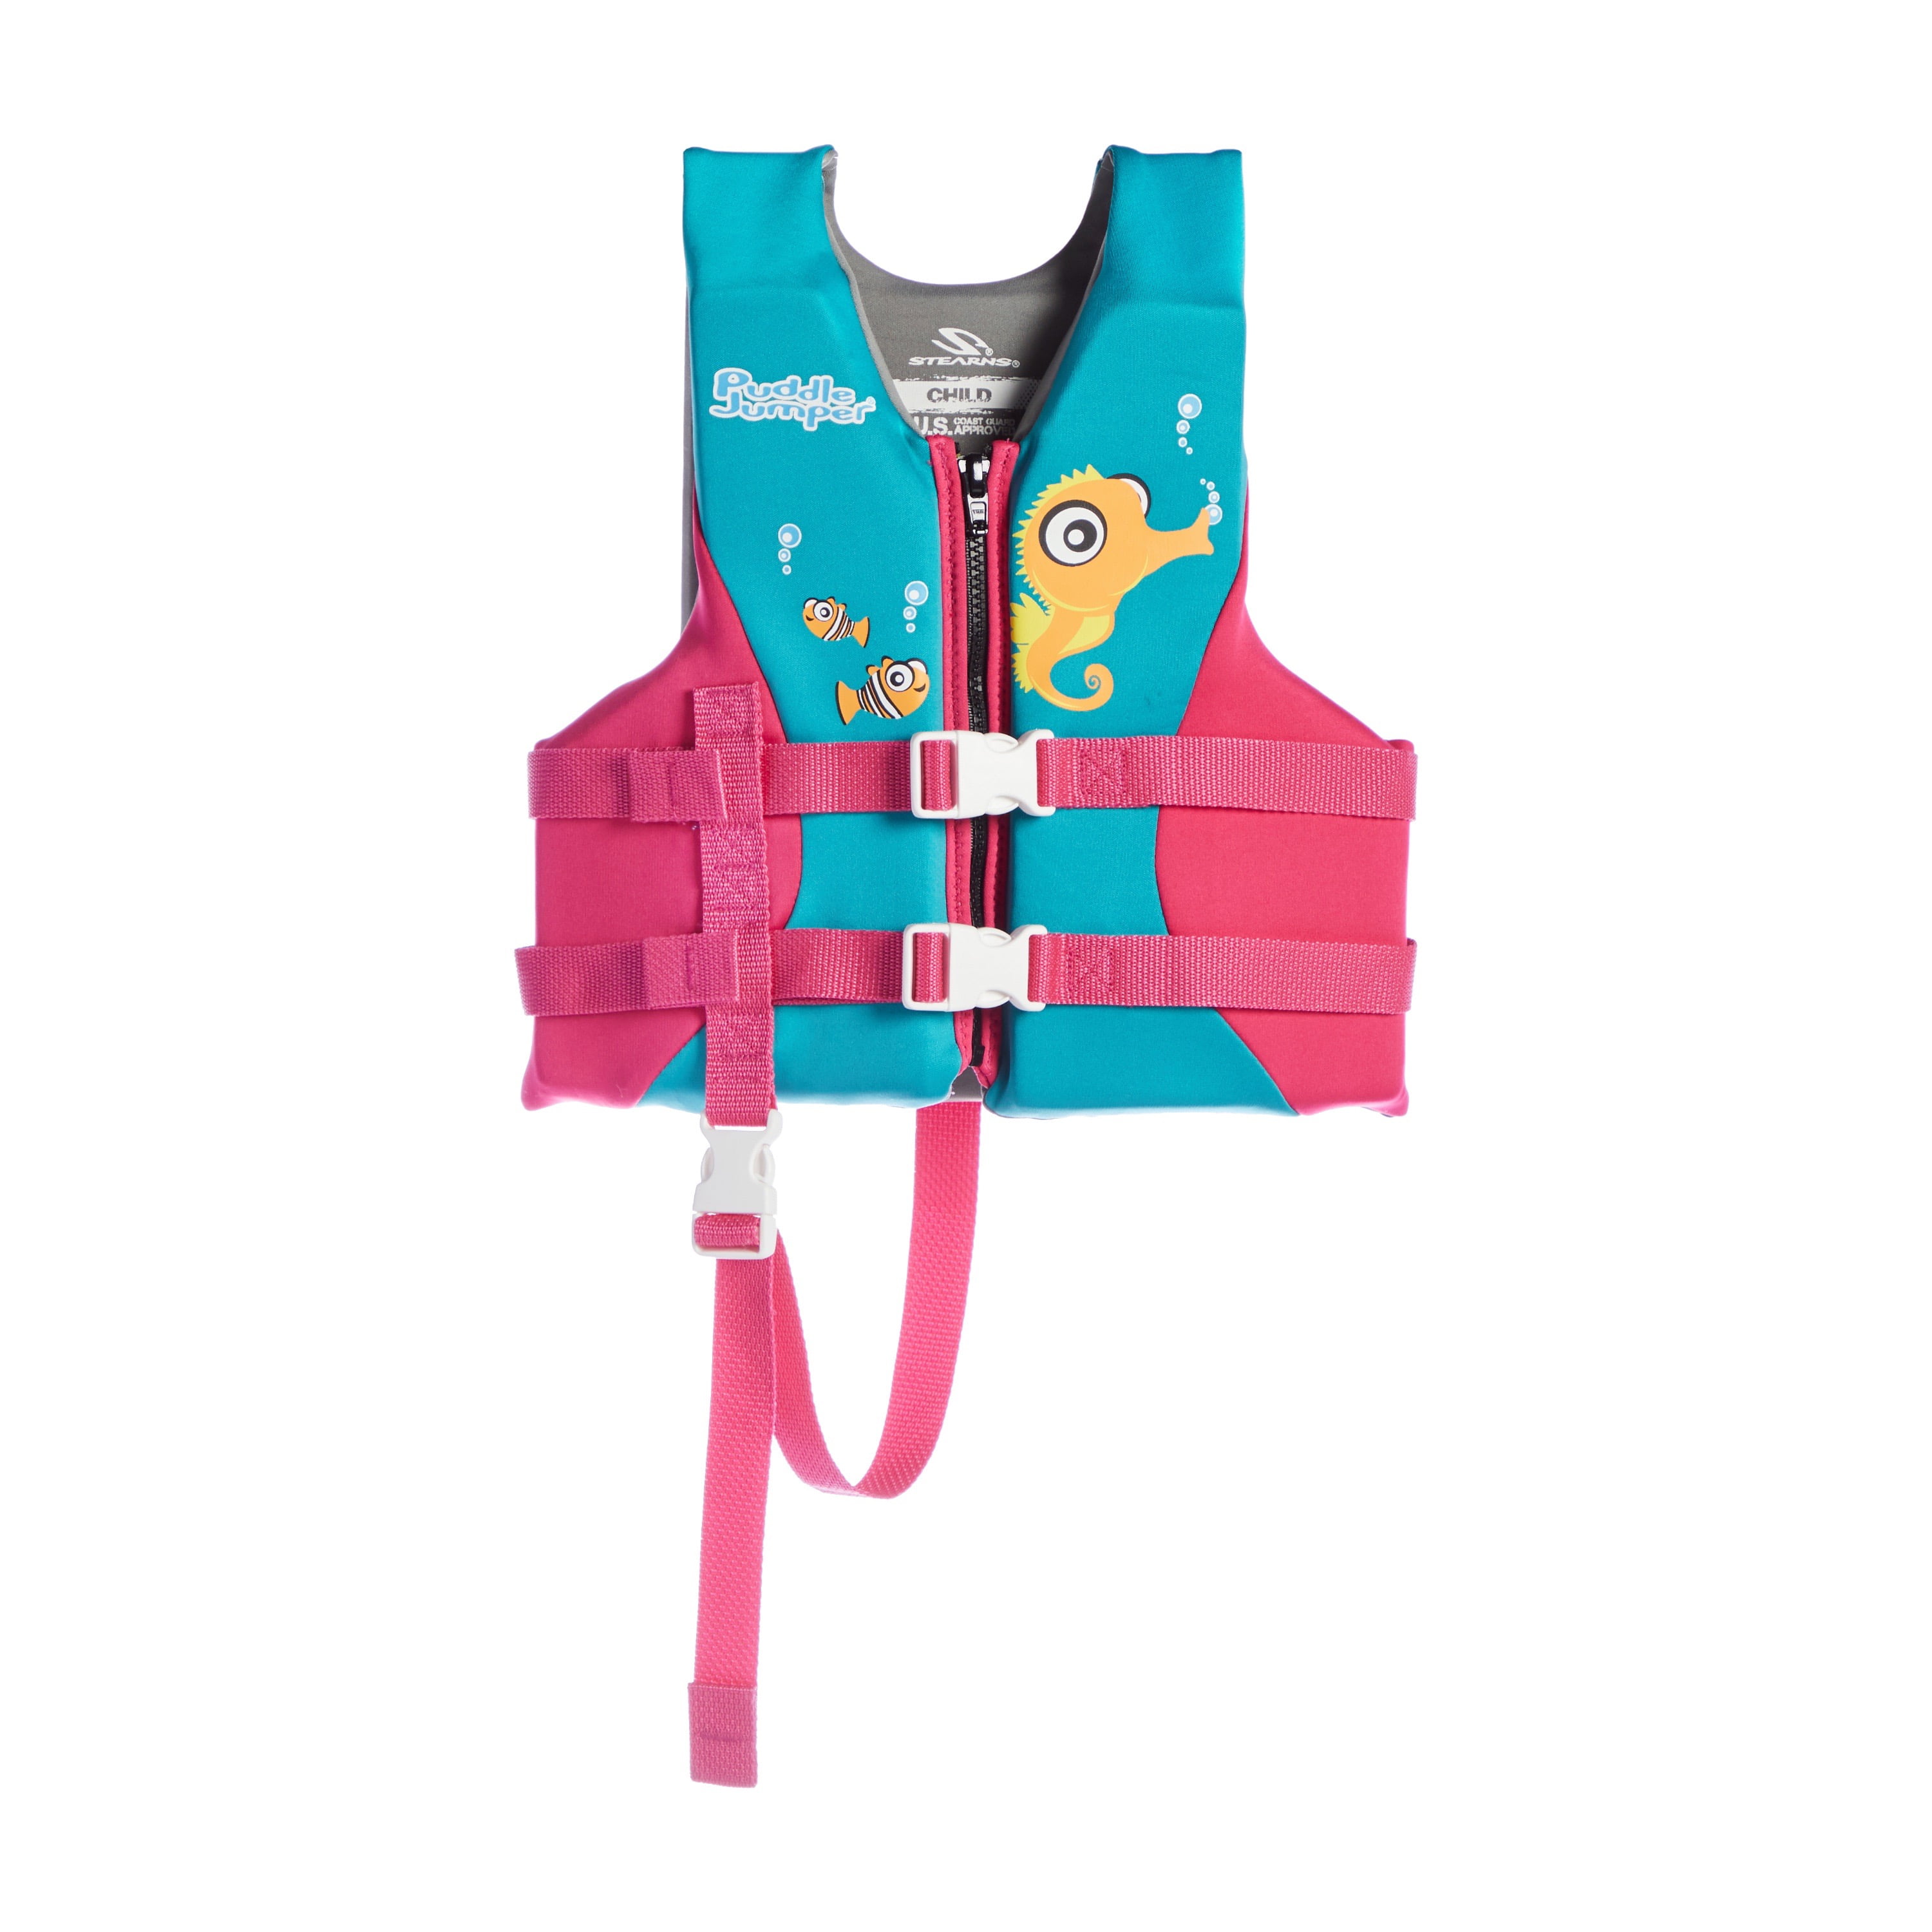 Stearns Puddle Jumper Cartoon Life Jacket Vest Swimming Arm Floats for Kids US 